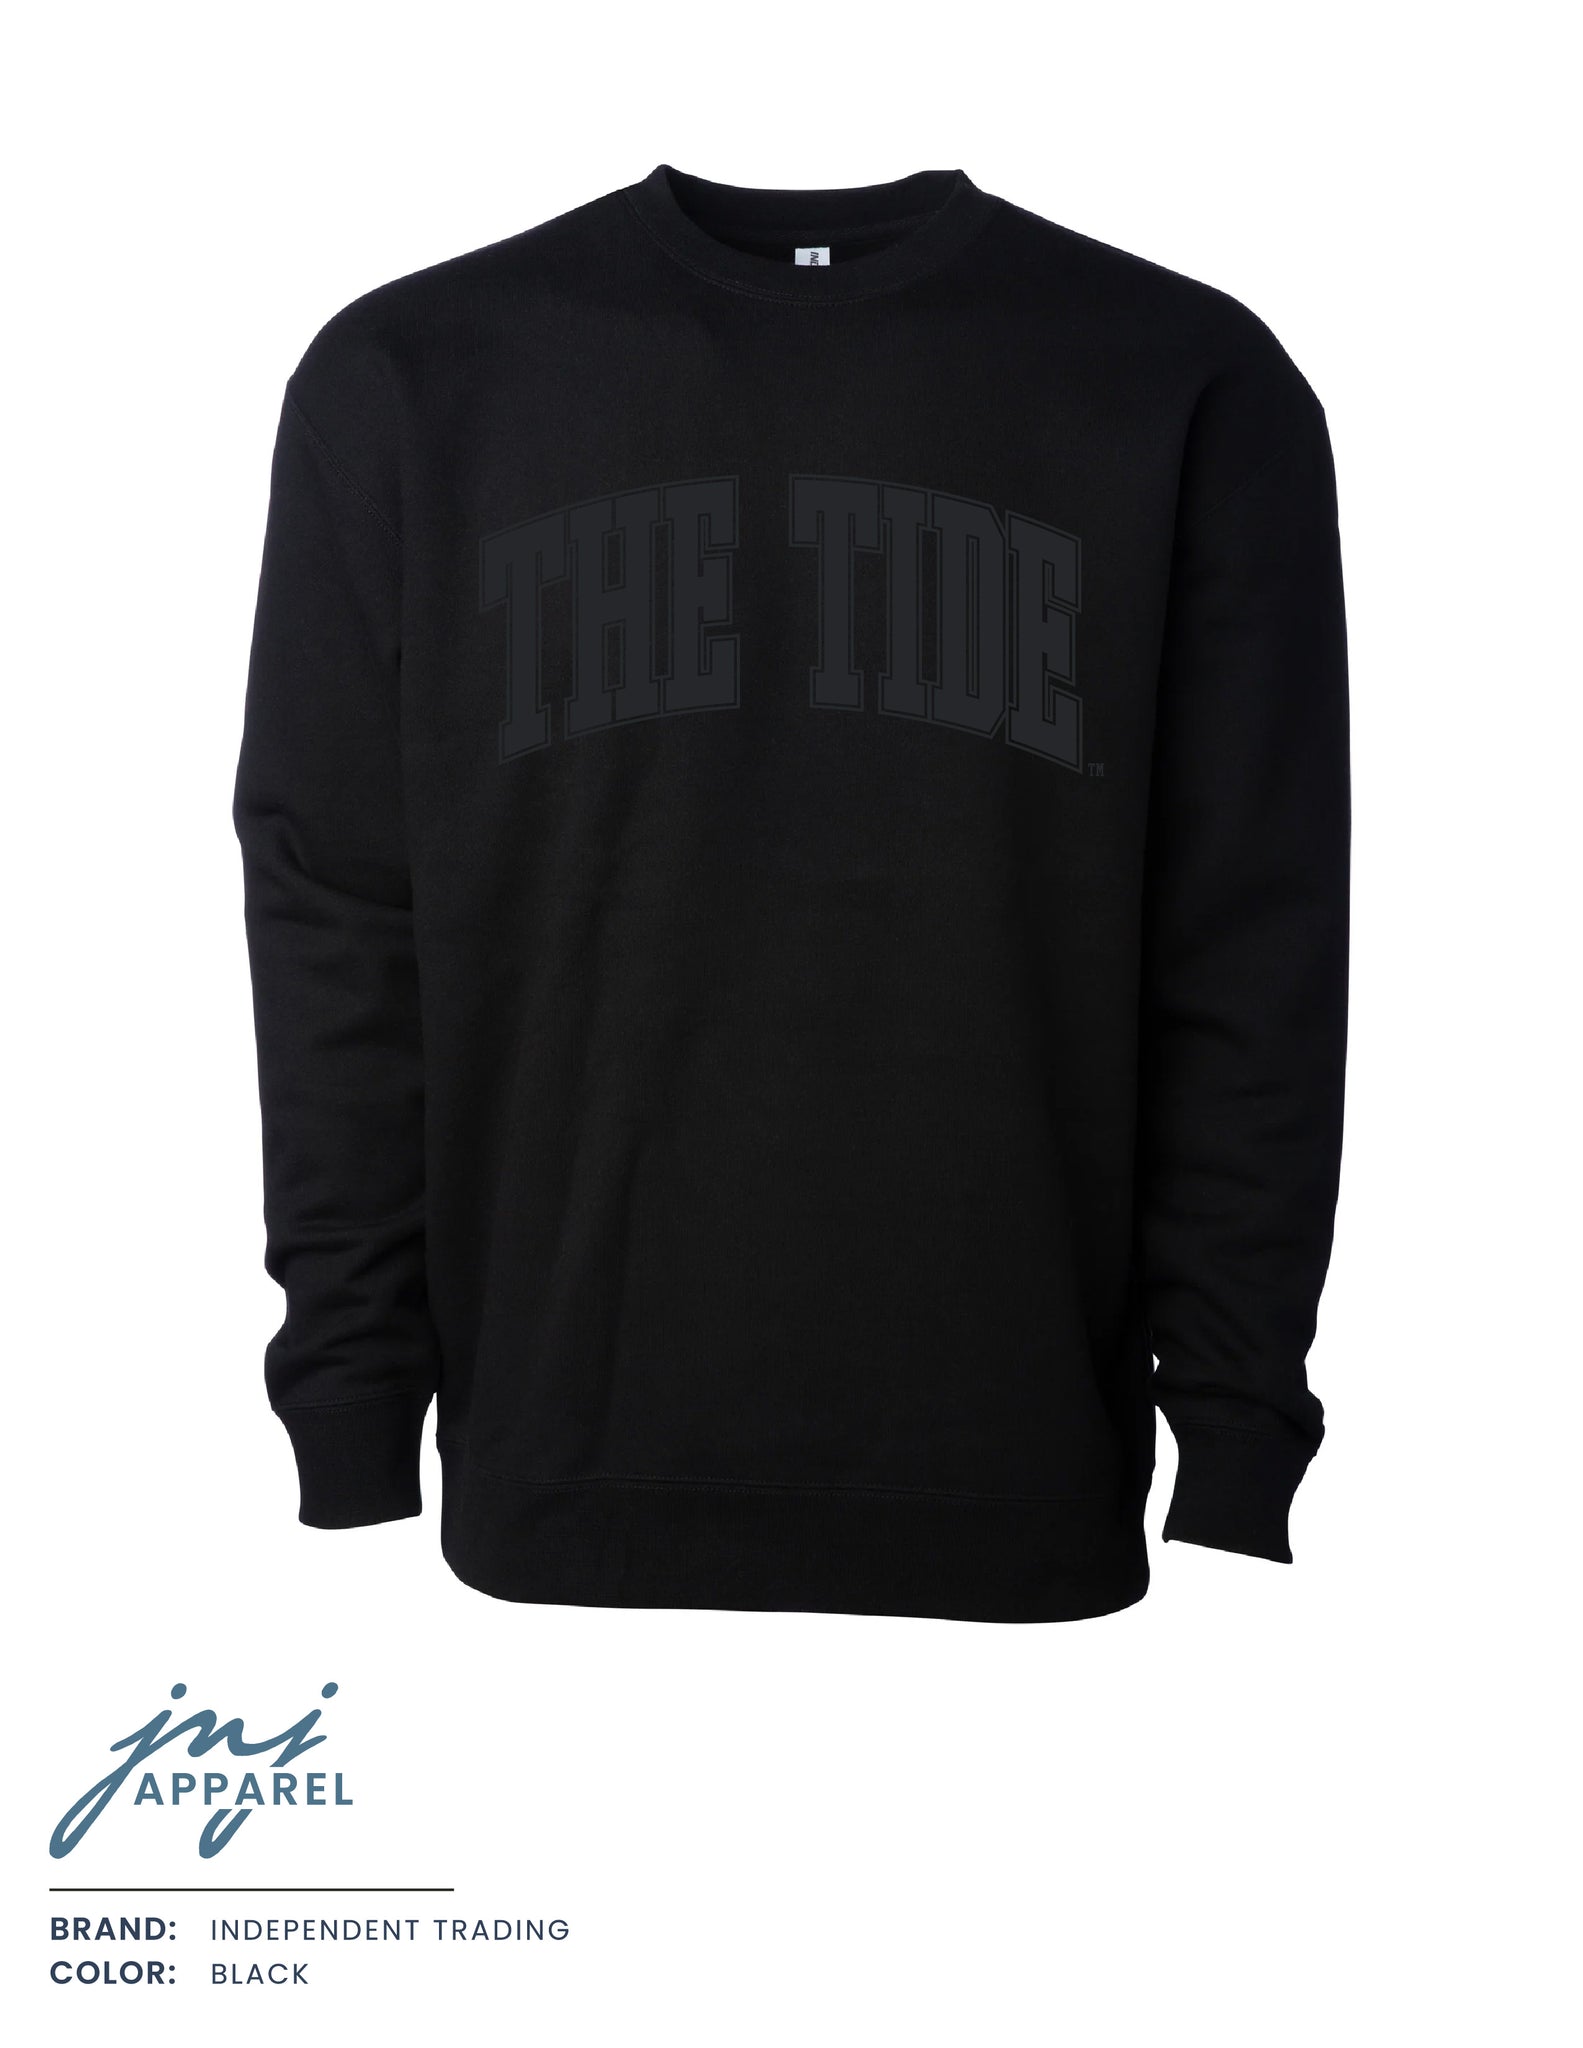 The Tide Varsity Sweatshirt